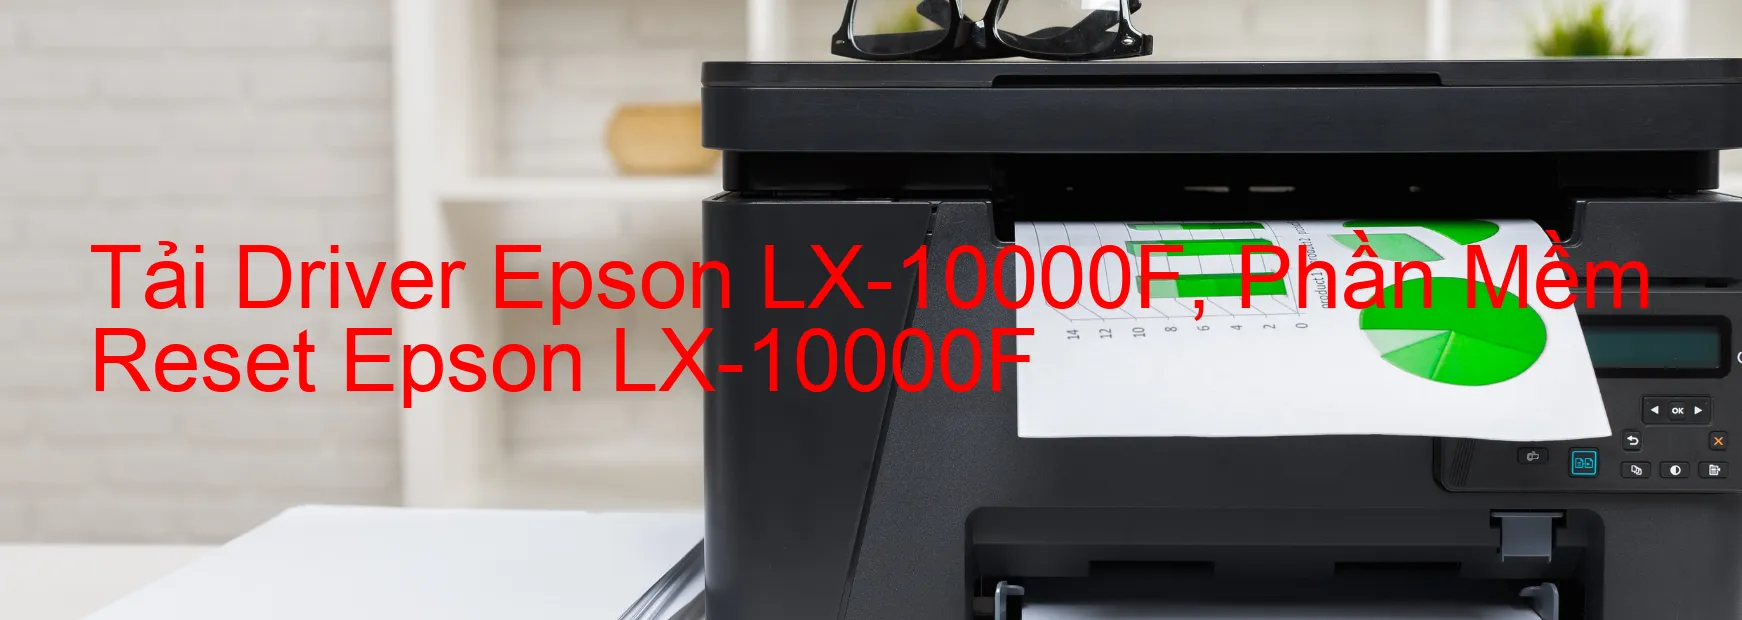 Driver Epson LX-10000F, Phần Mềm Reset Epson LX-10000F